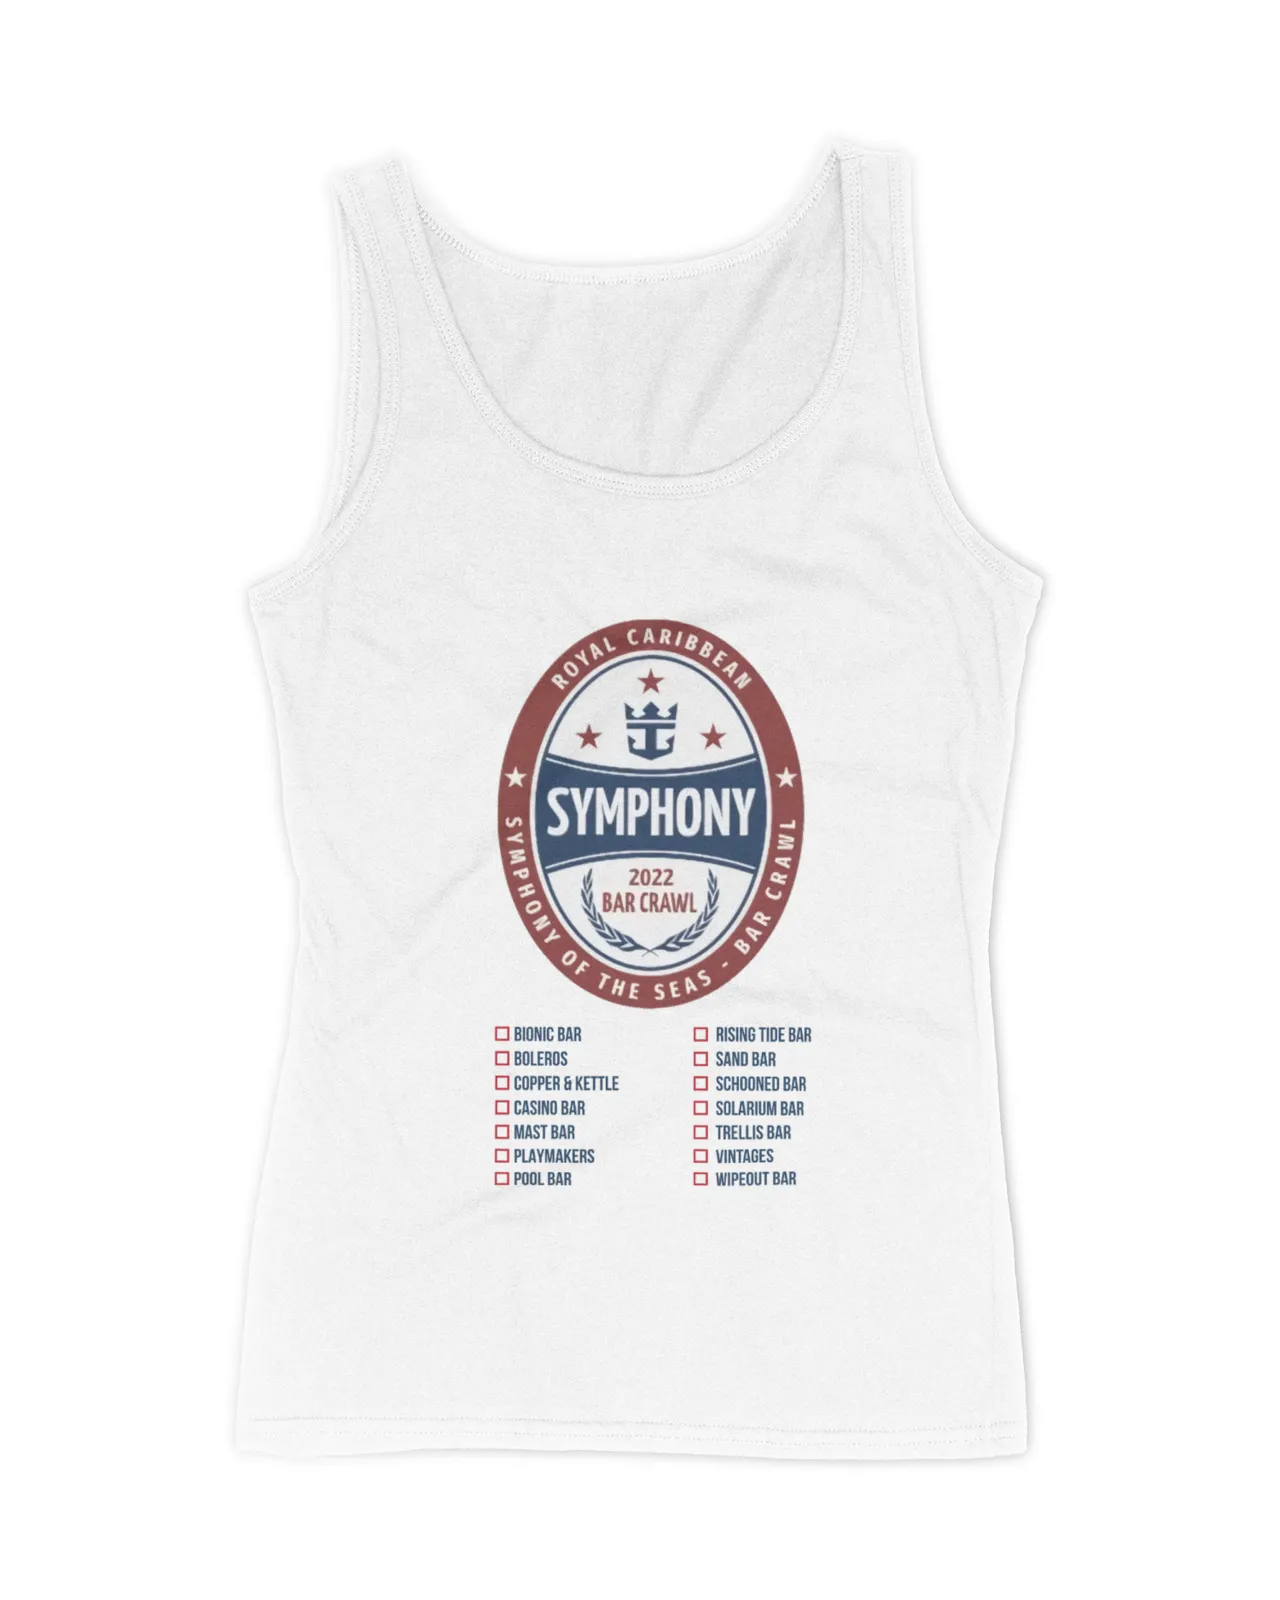 Royal Caribbean Symphony Of The Seas Bar Crawl Shirt